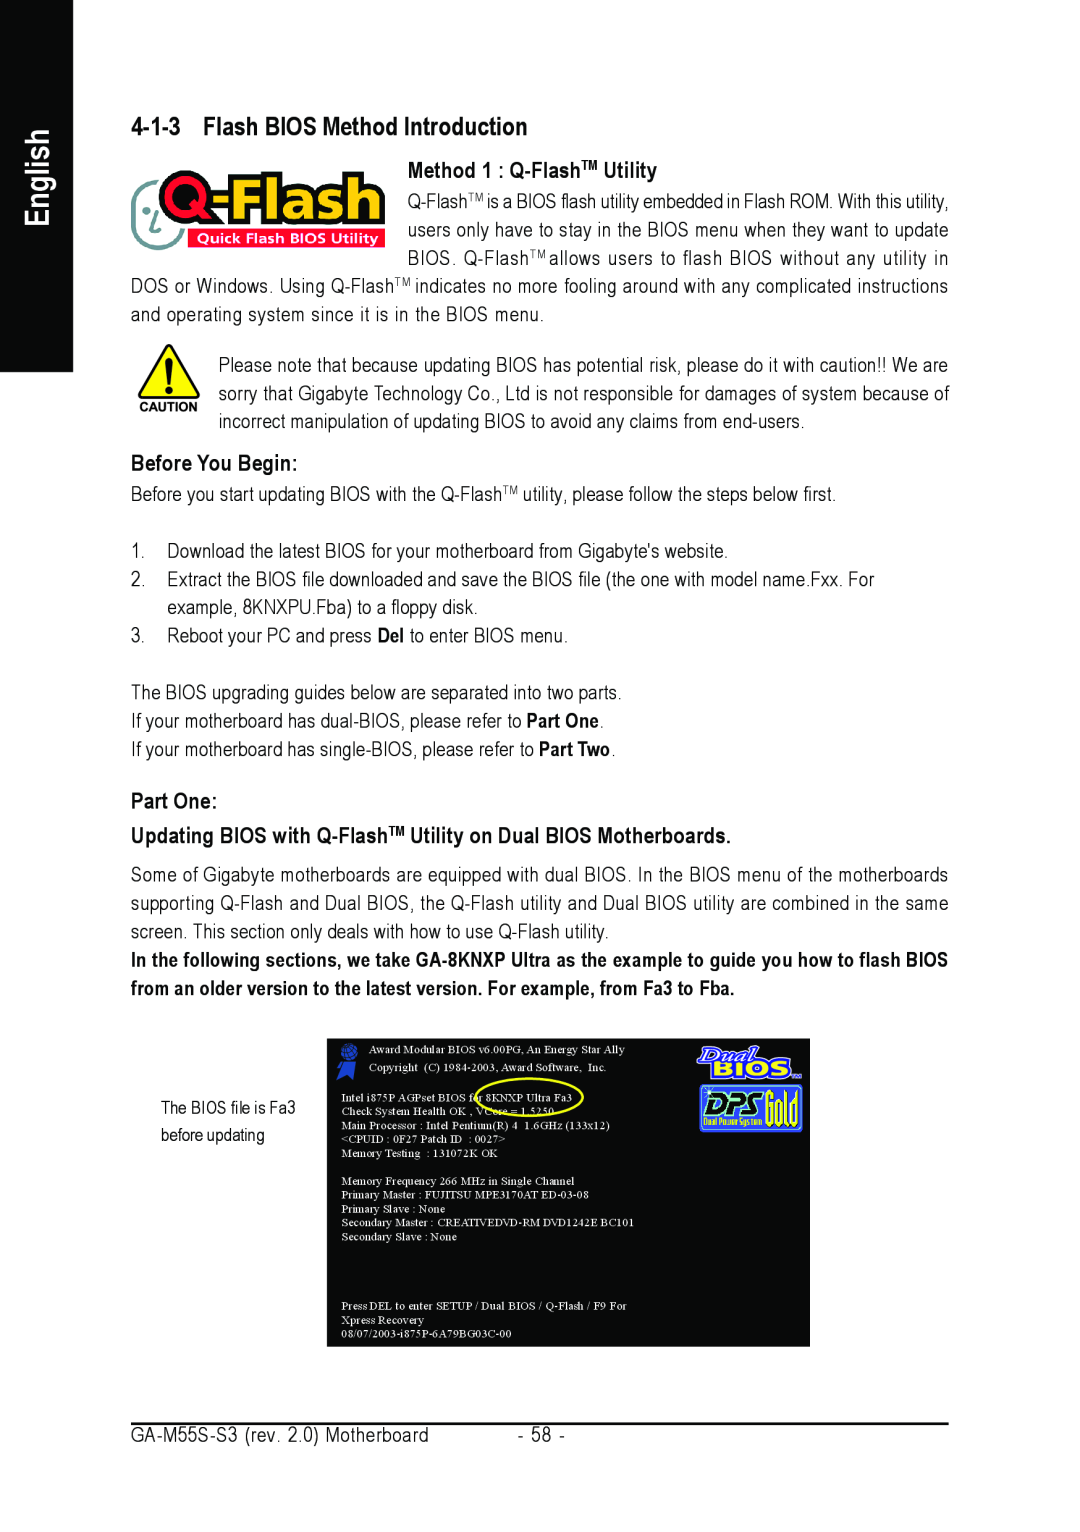 Gigabyte GA-M55S-S3 Flash BIOS Method Introduction, Method 1 Q-FlashTM Utility, Before You Begin, Part One, English 